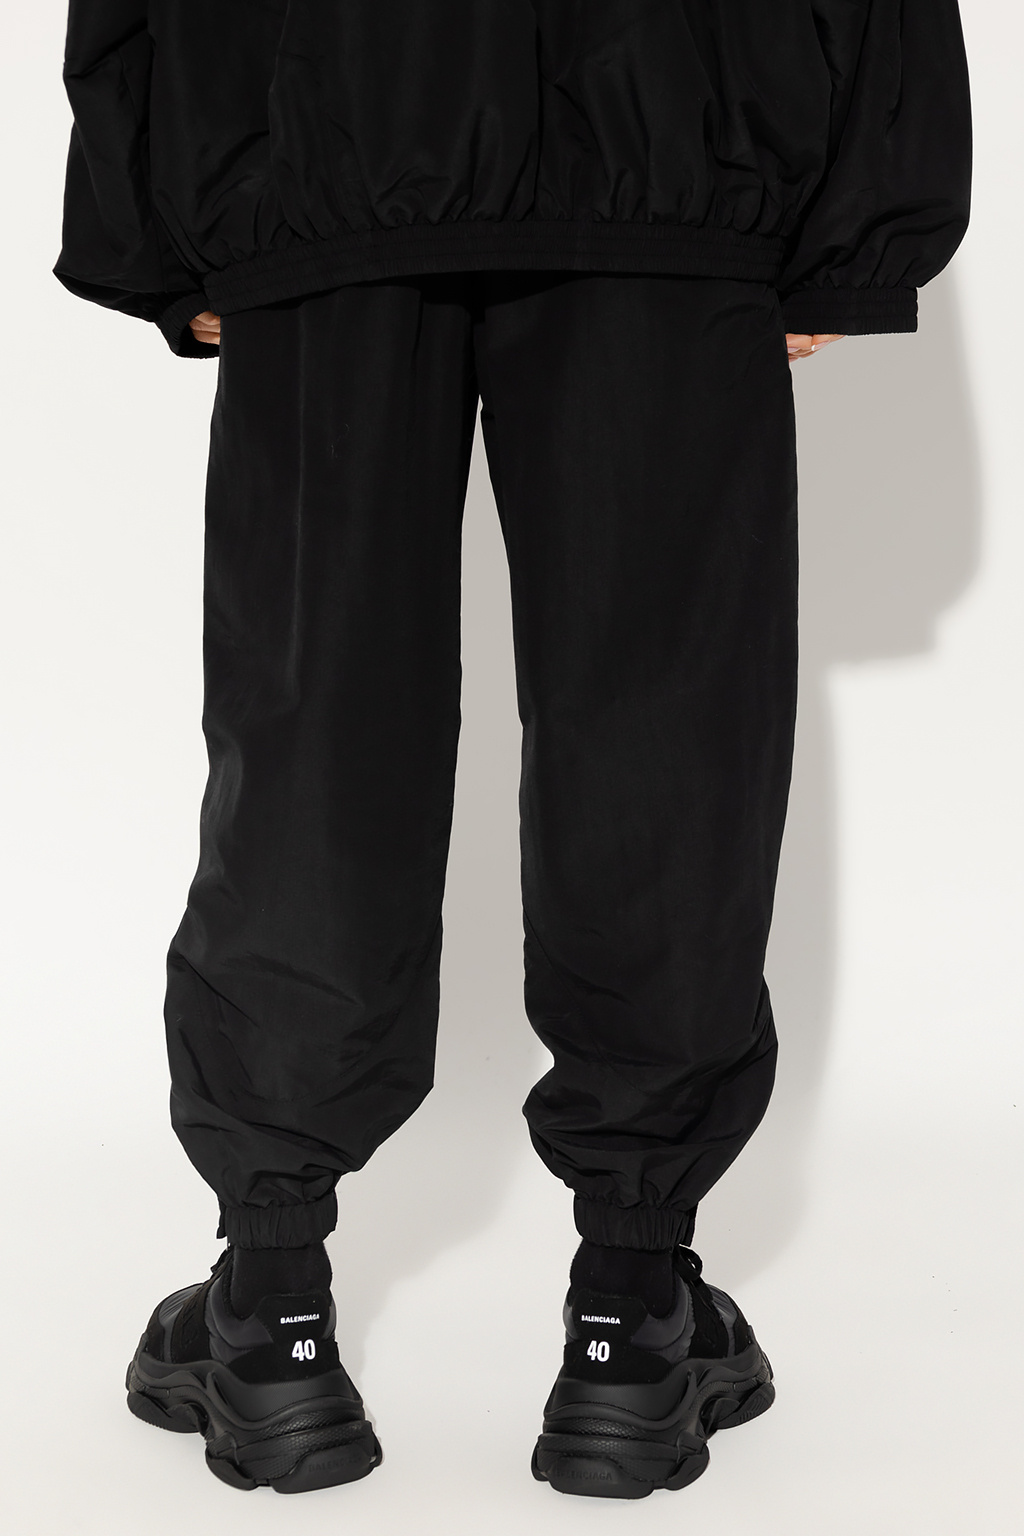 Black Track pants with logo Balenciaga - Vitkac Canada